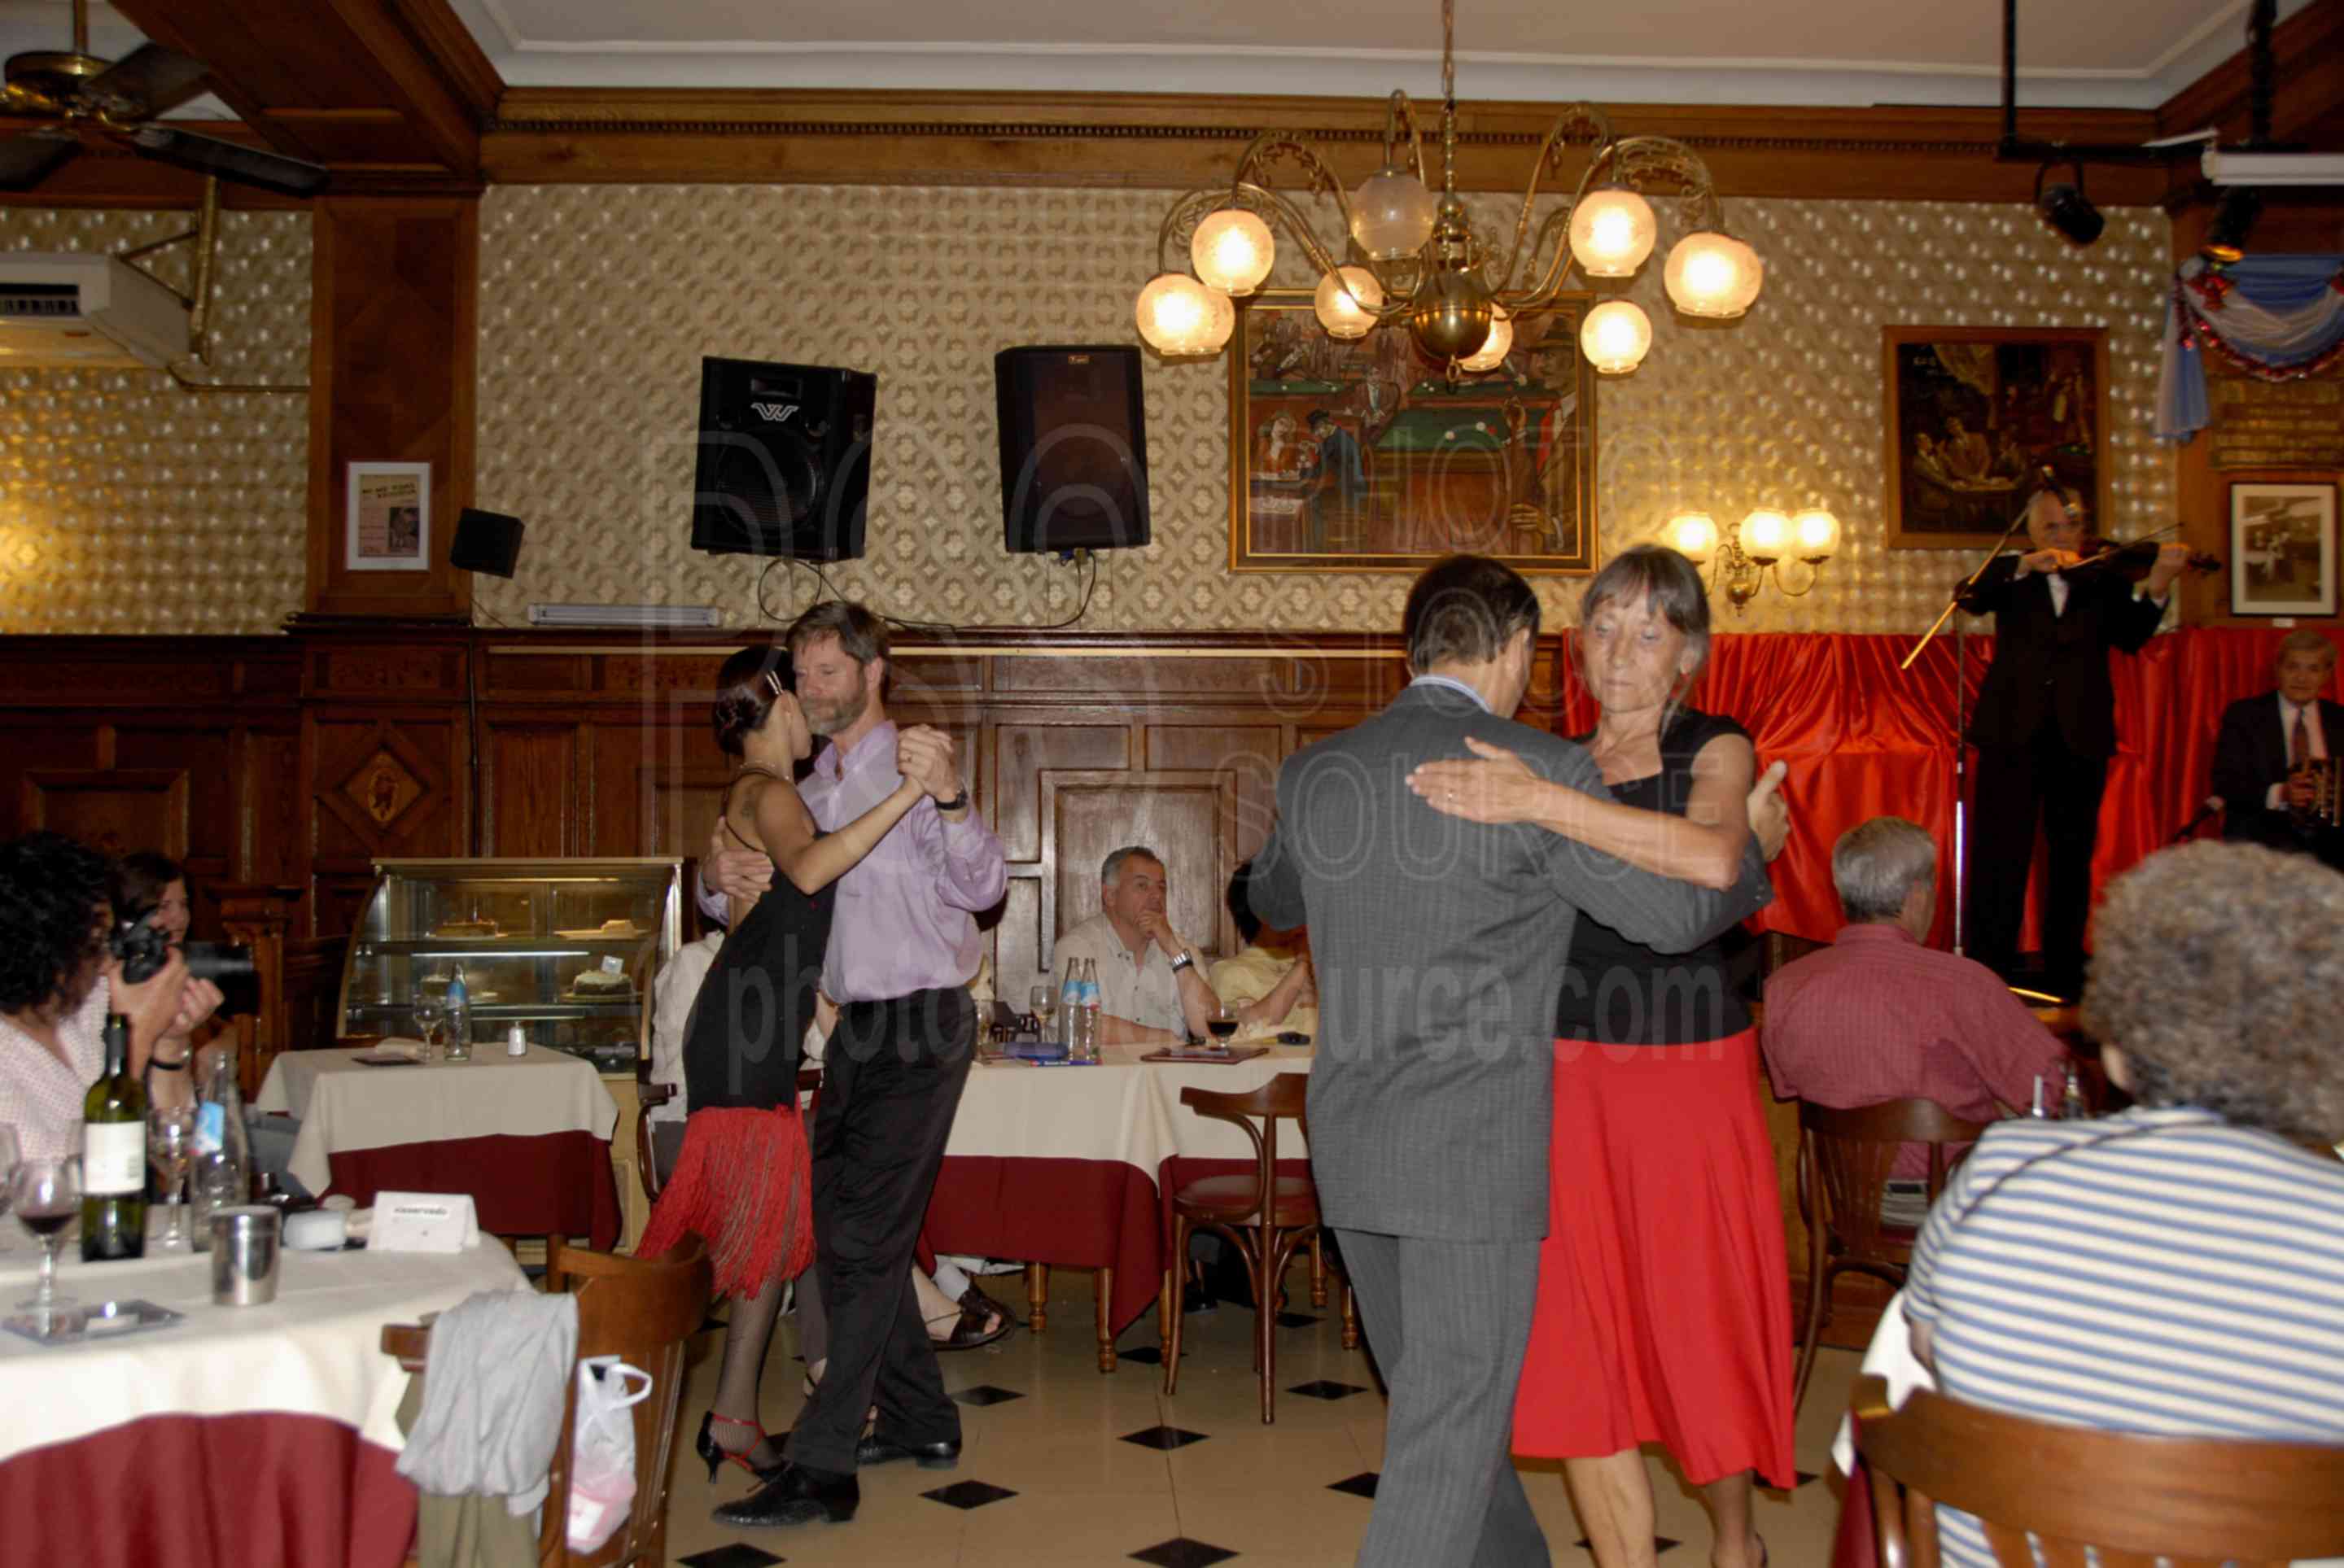 Tango Dancers,romina veron,tango,tango dancers,tango show,jon,argentina bars restaurants